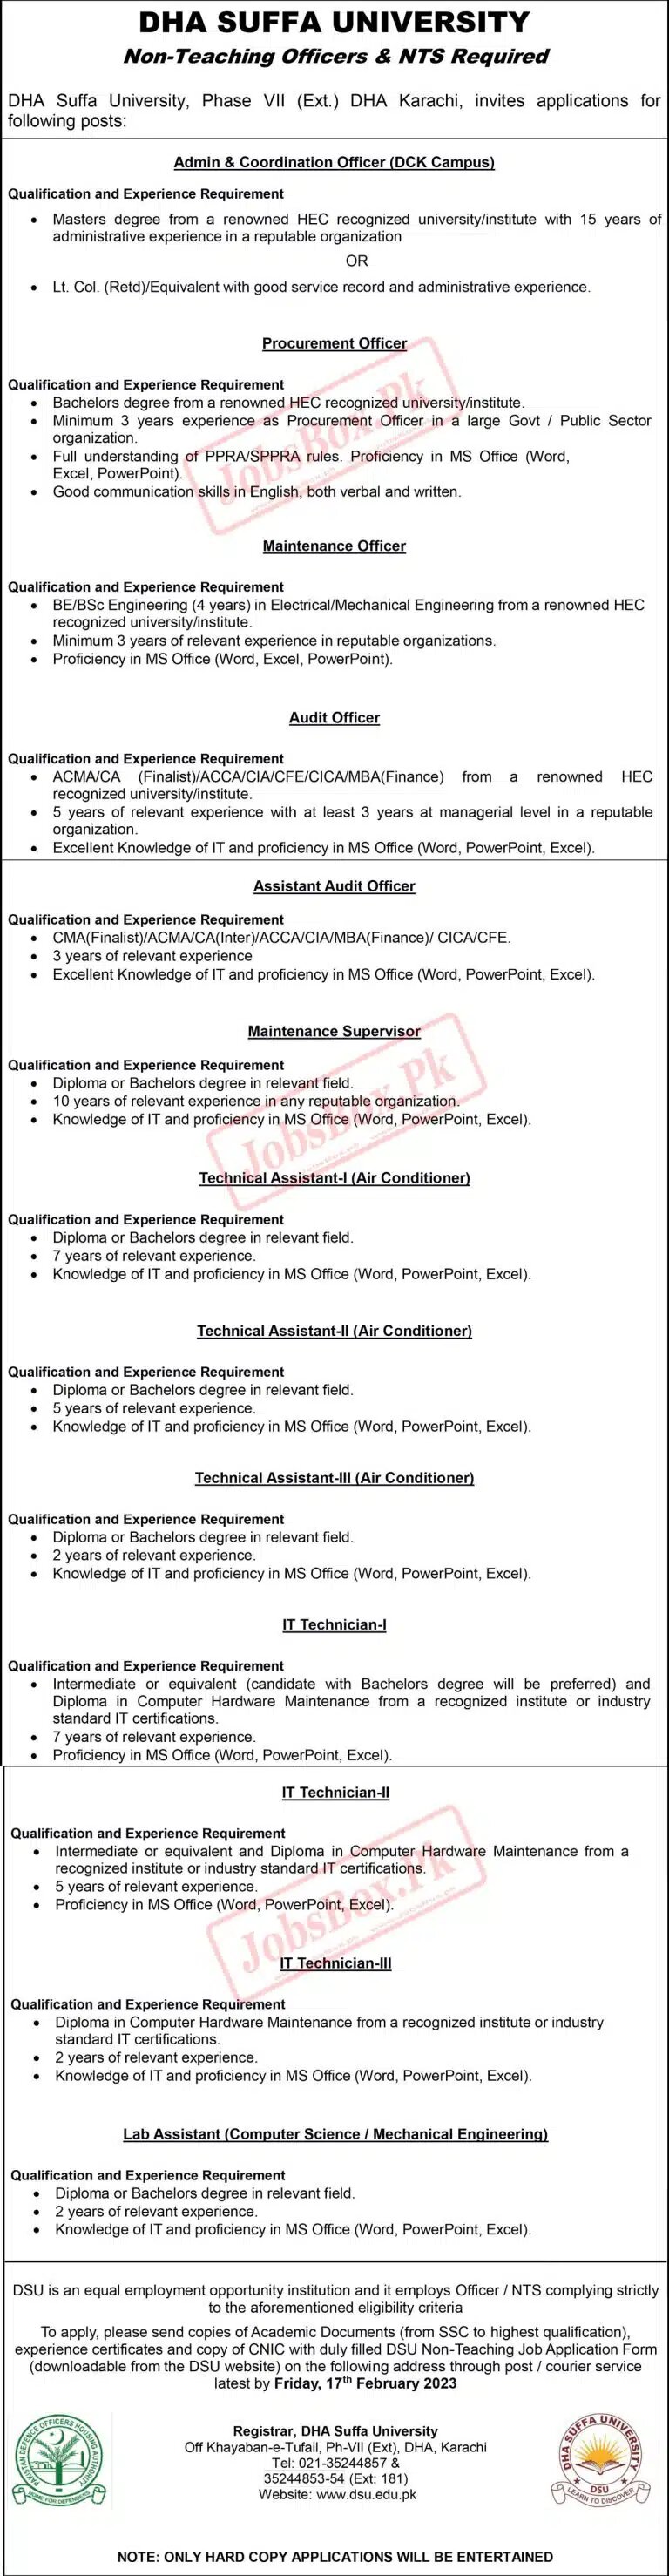 DHA Staff University Recruitments 2023 Details At www.dsu.edu.pk